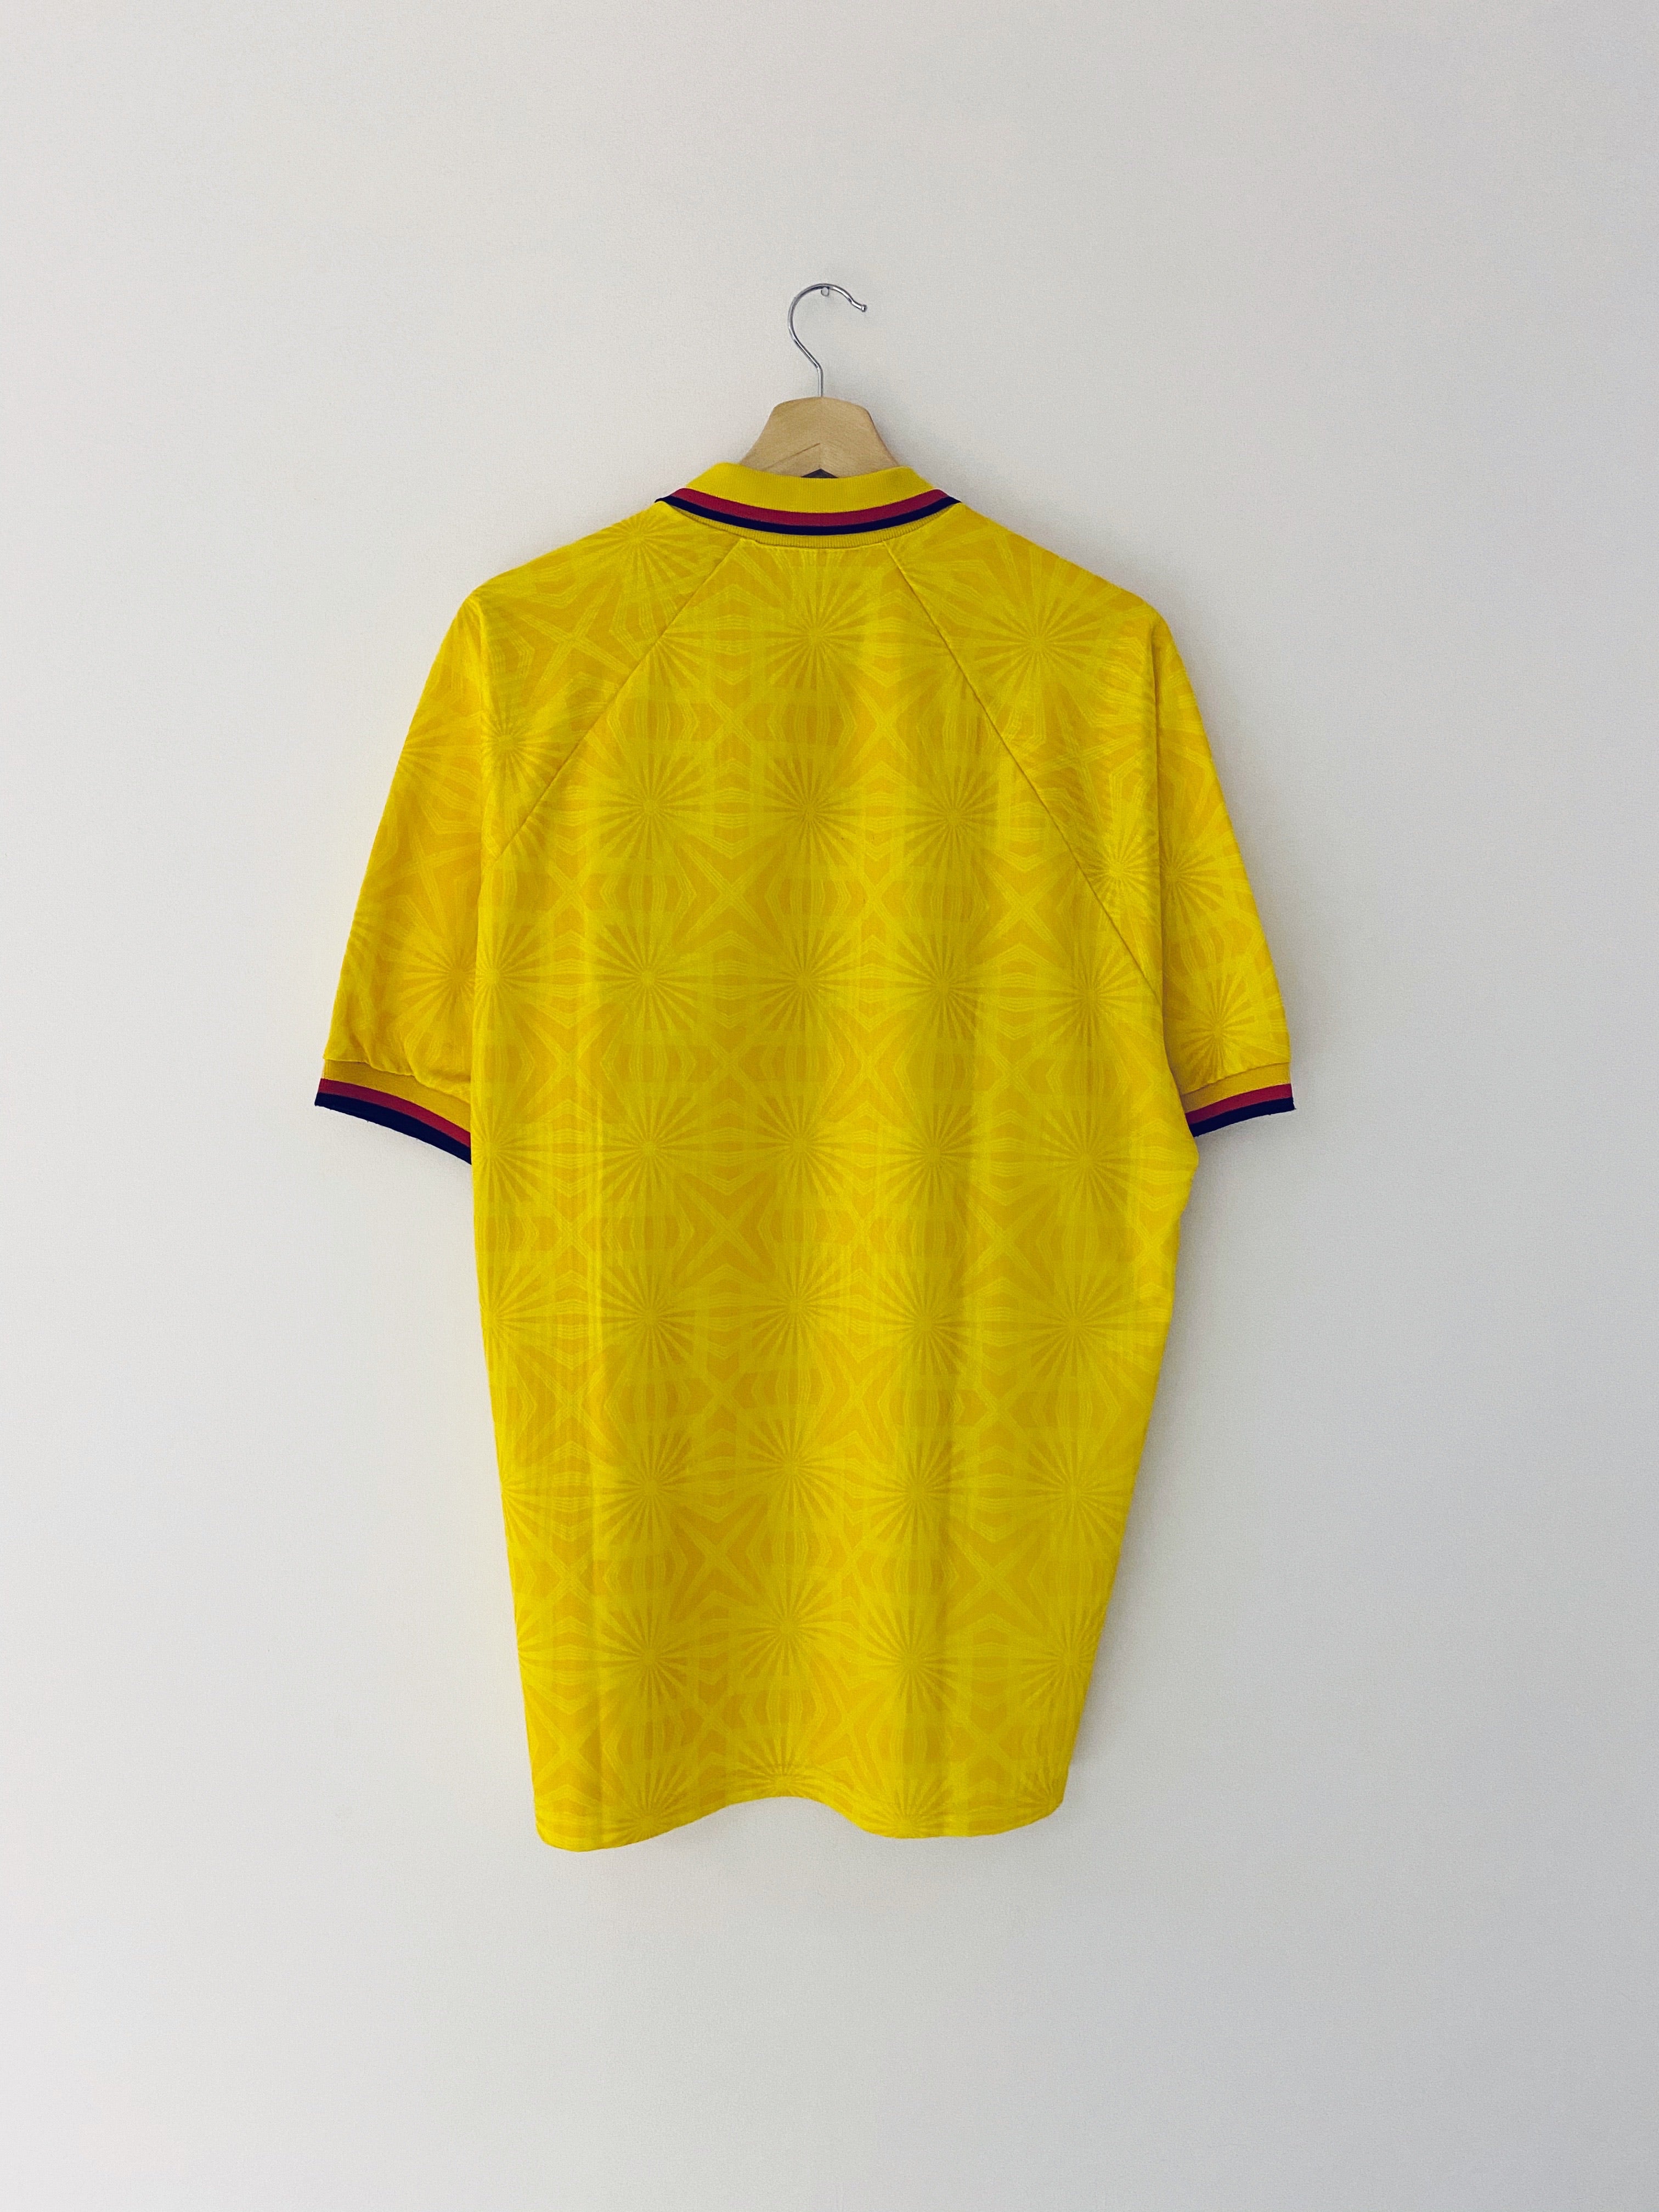 1994/95 Ravenna Home Shirt (XL) 7.5/10